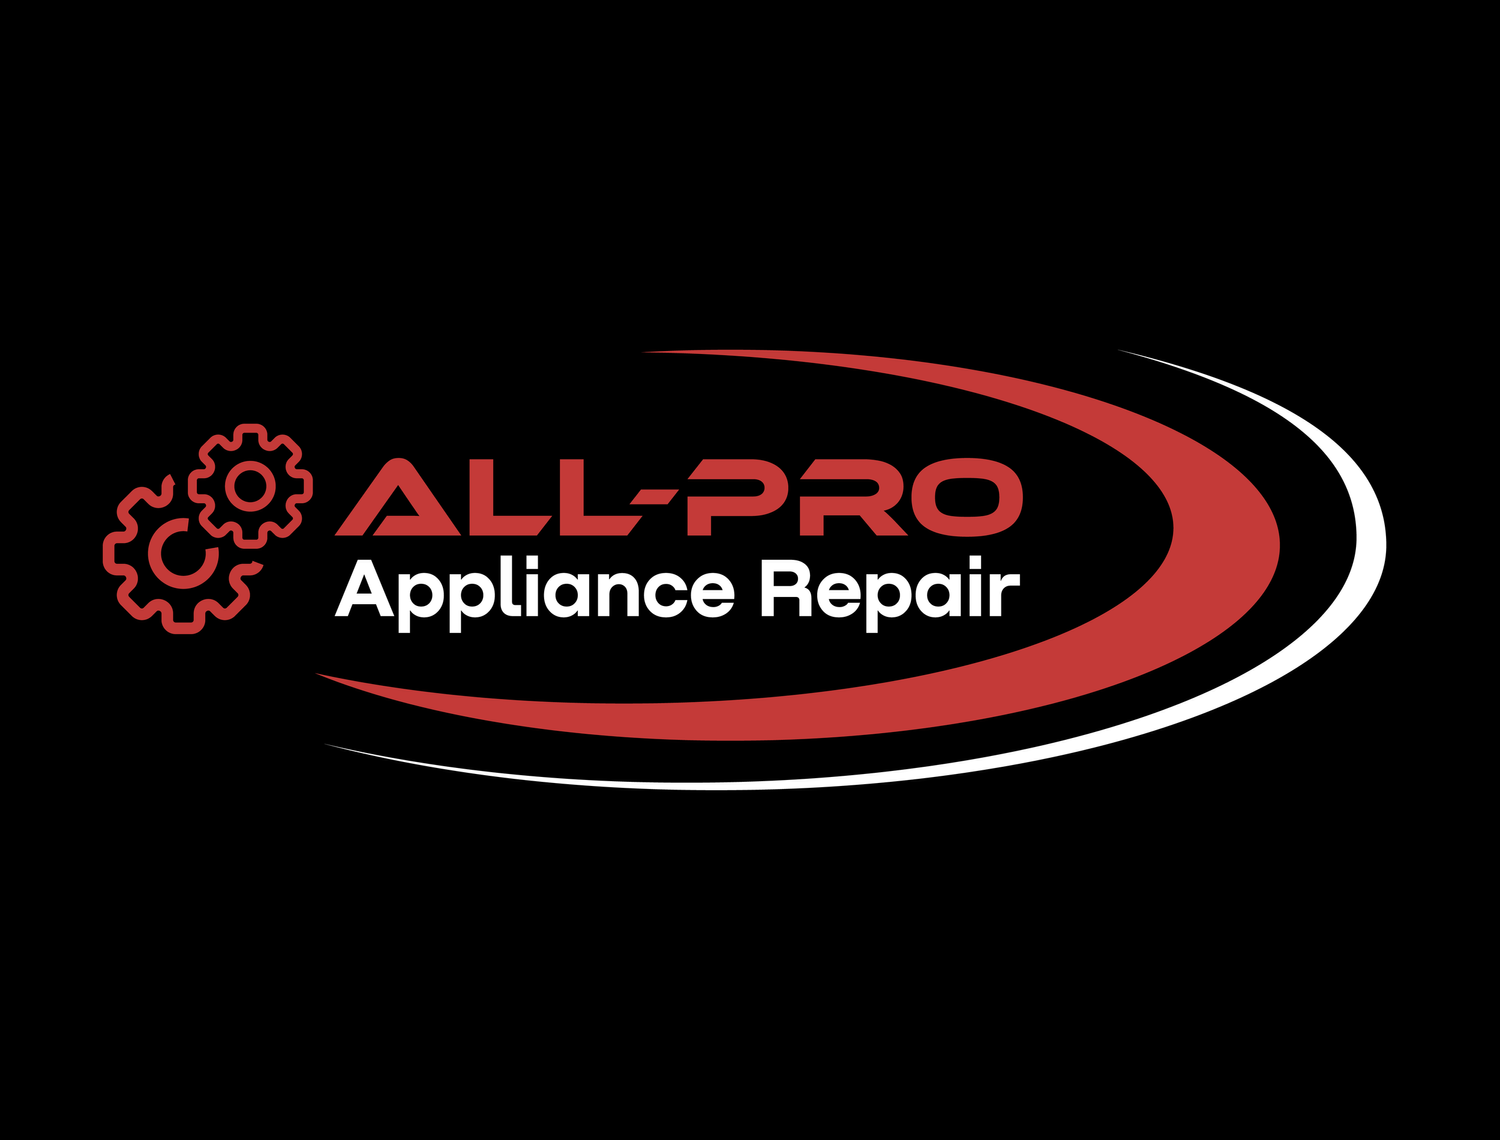 All-Pro Appliance Repair